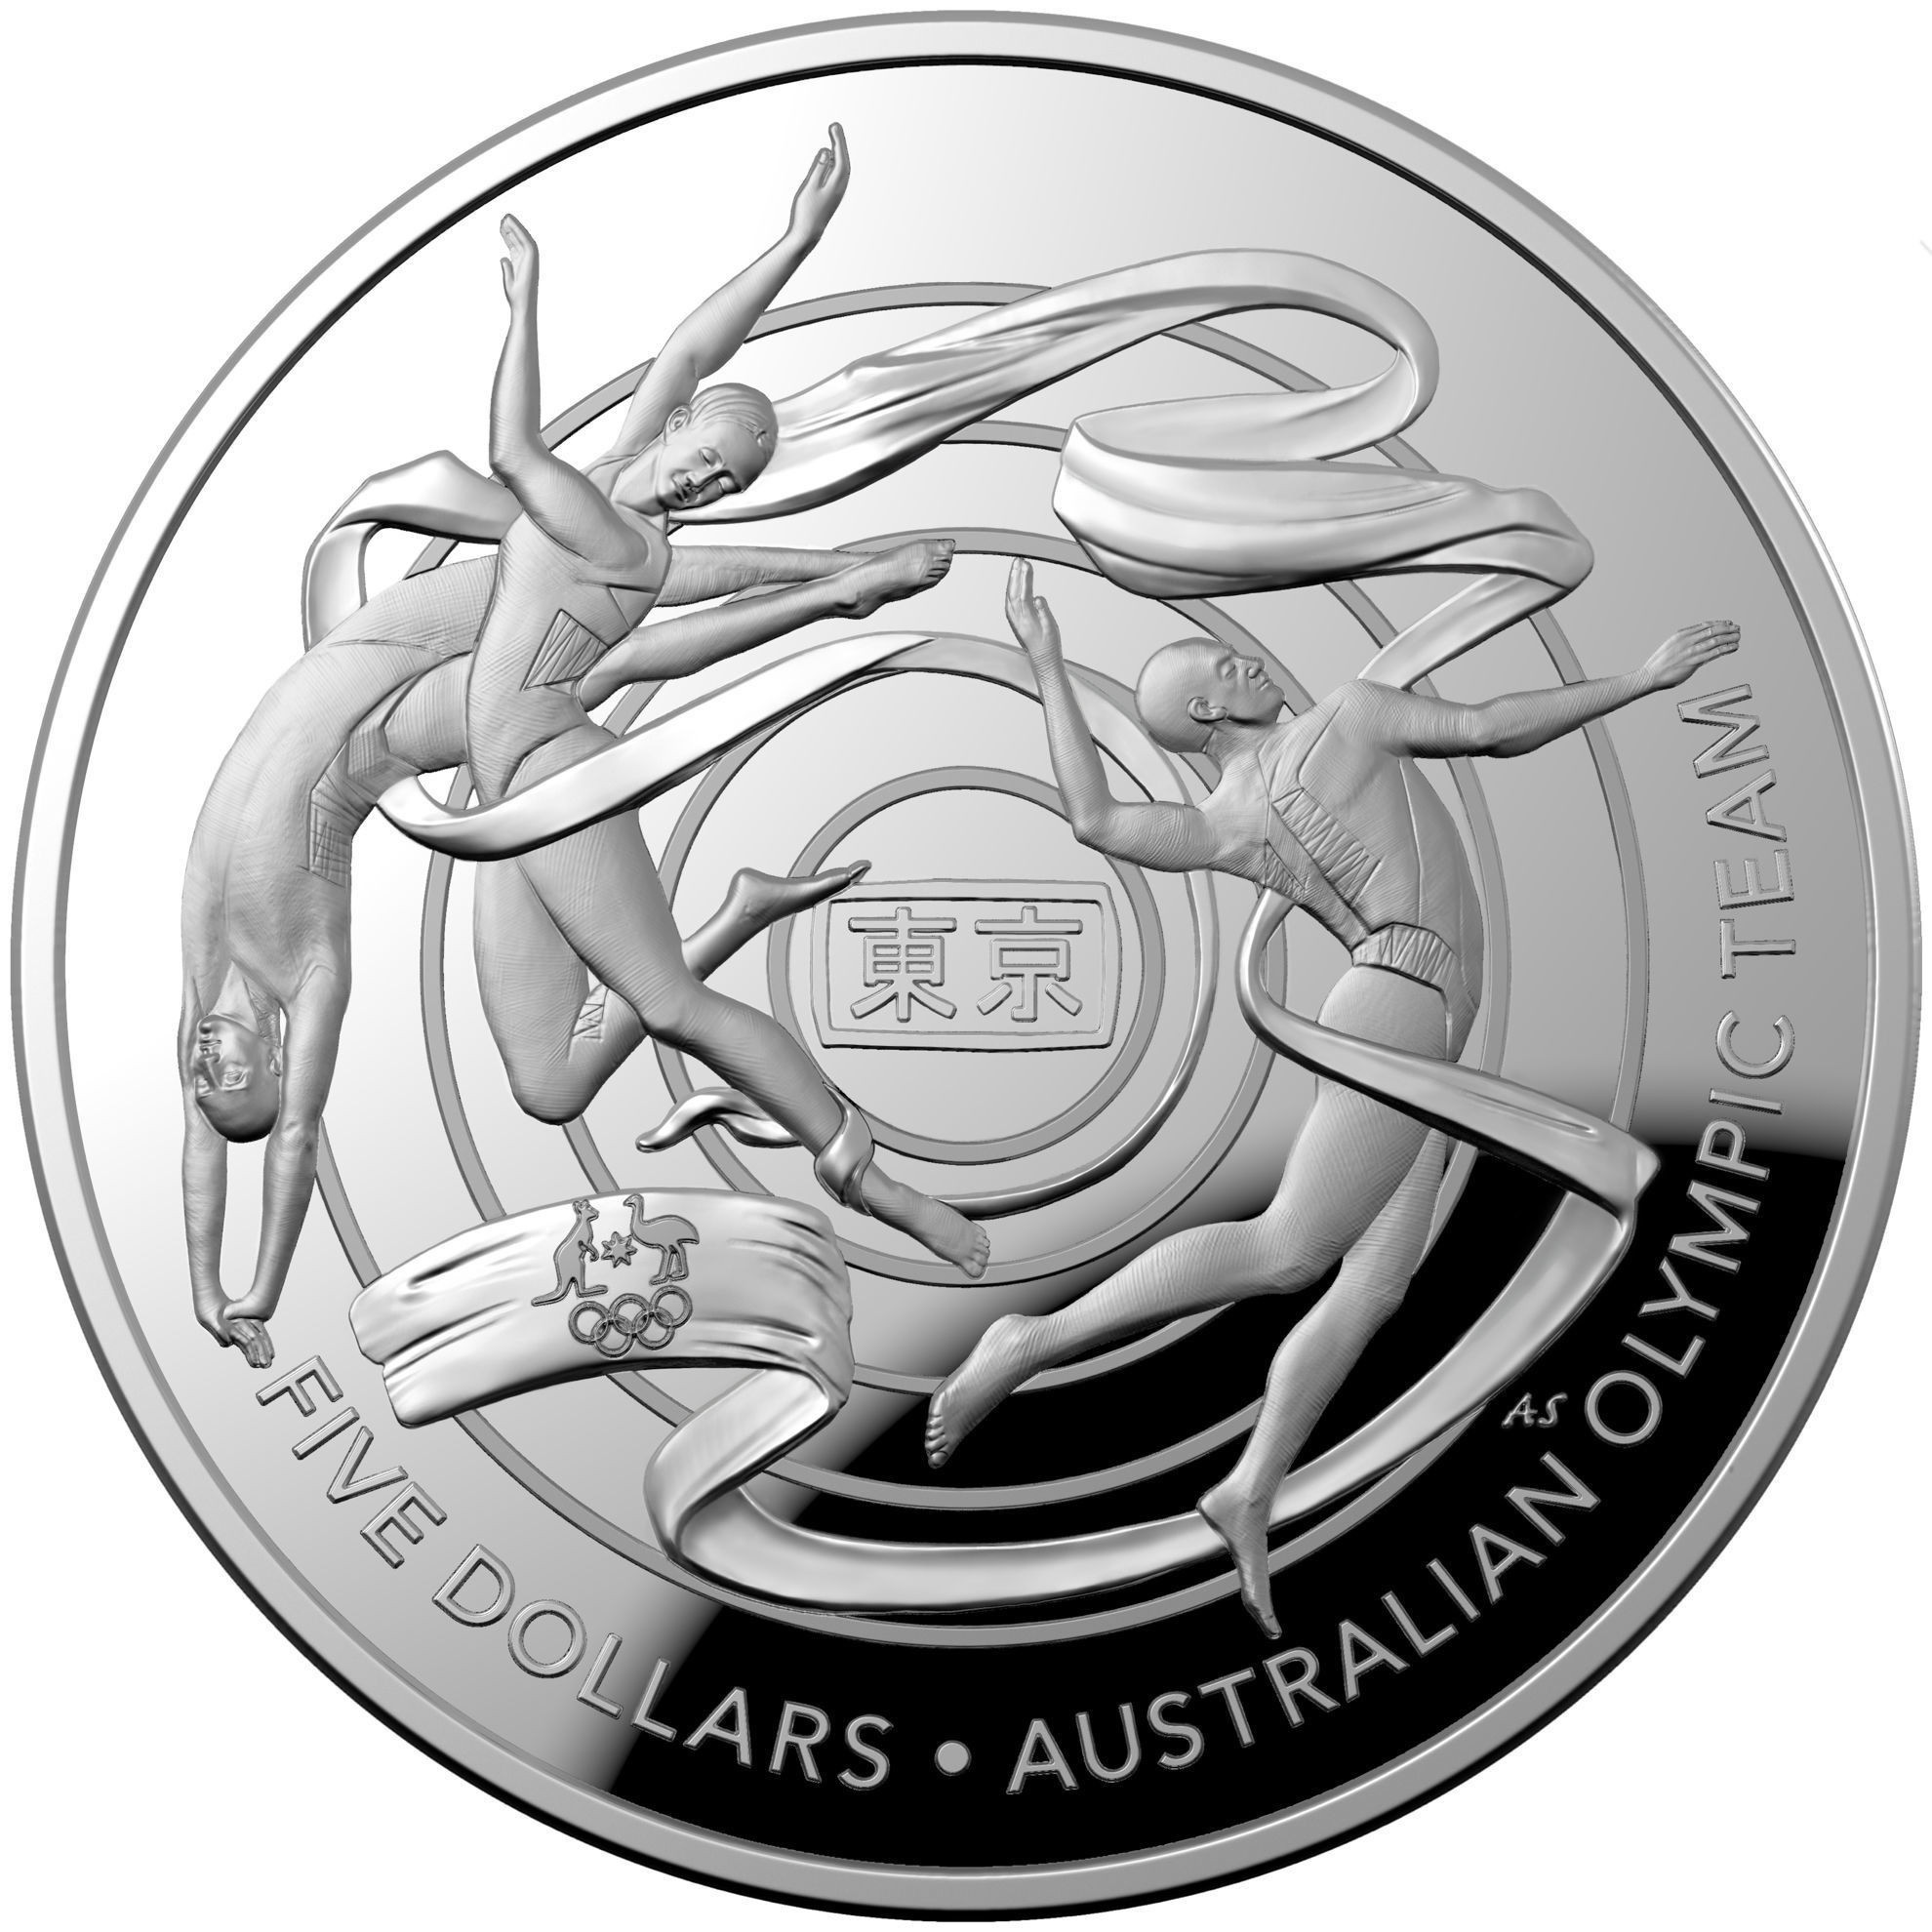 Aleksandra Stokic has designed the new AUD$5 Olympic coin for the Royal Australian Mint ©Royal Australian Mint